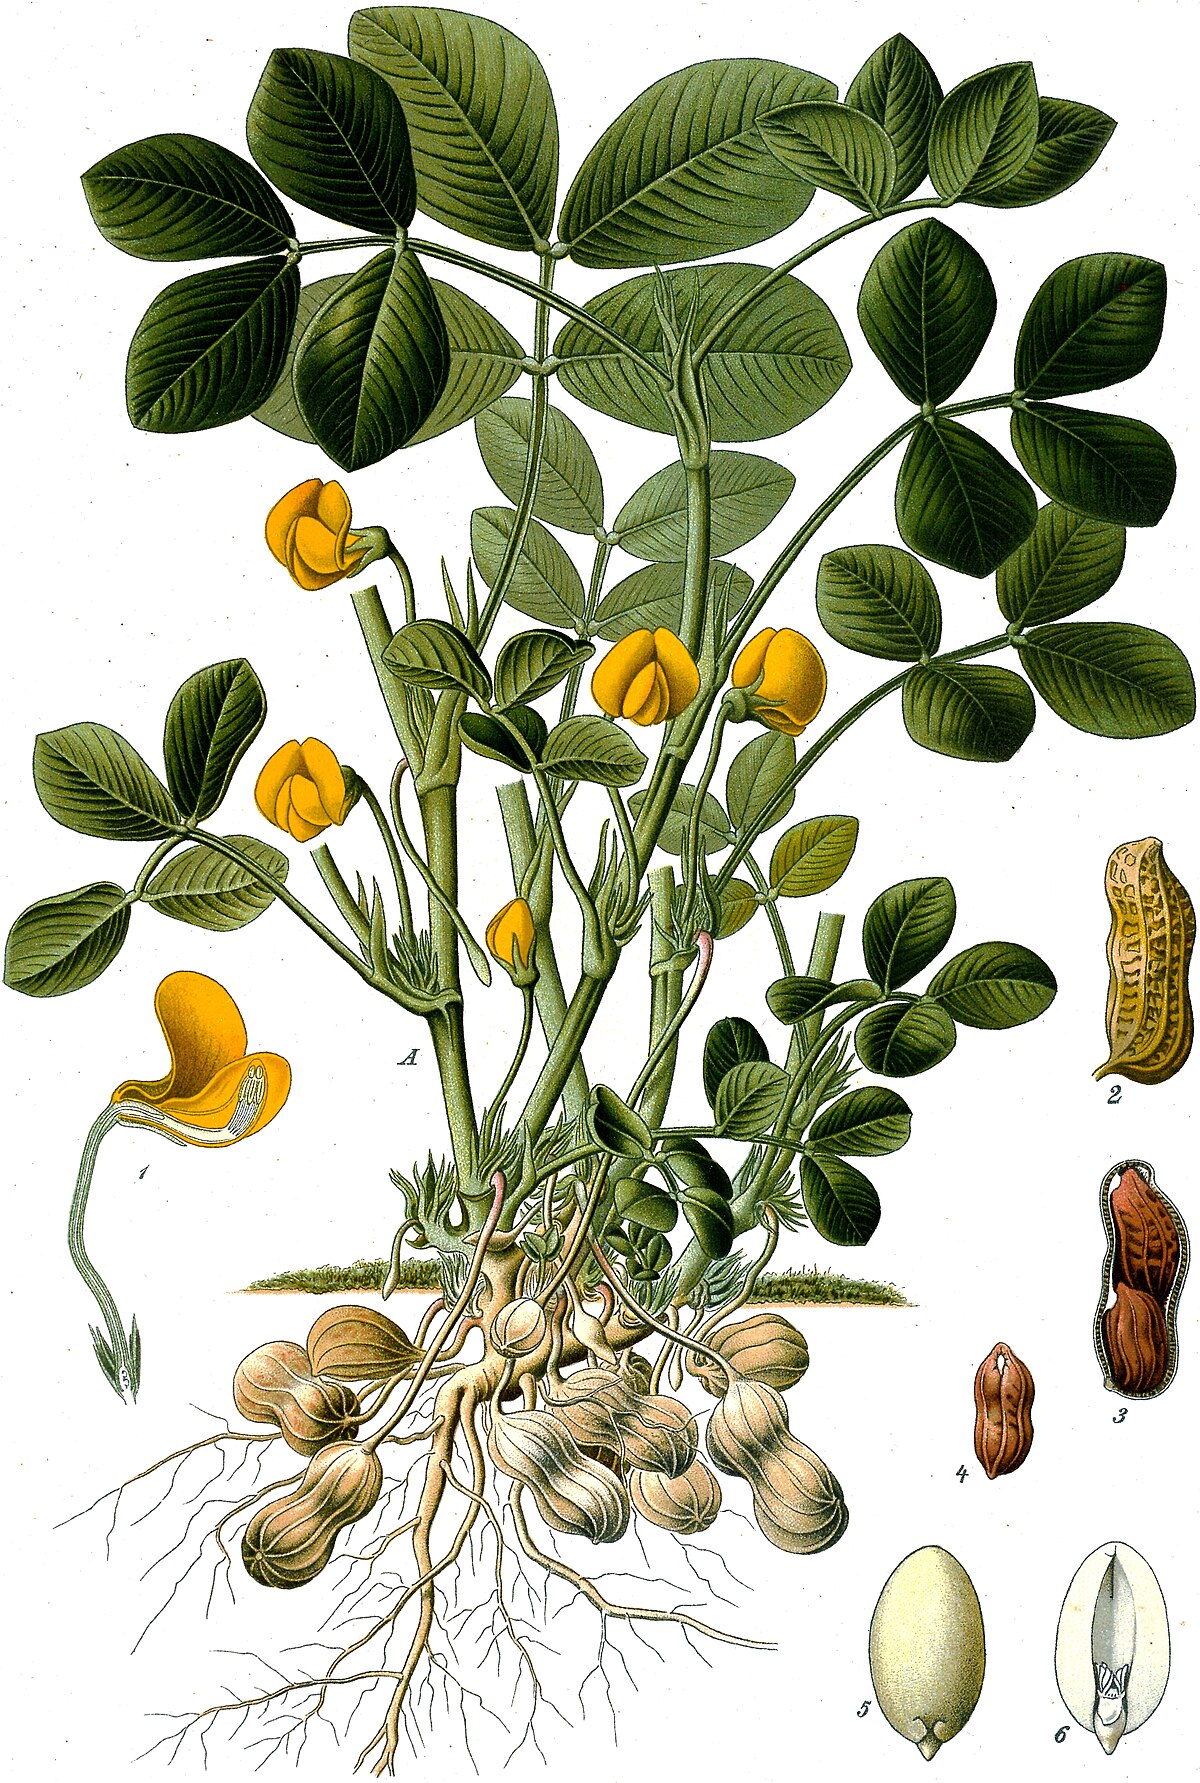 Mixed nuts - Wikipedia